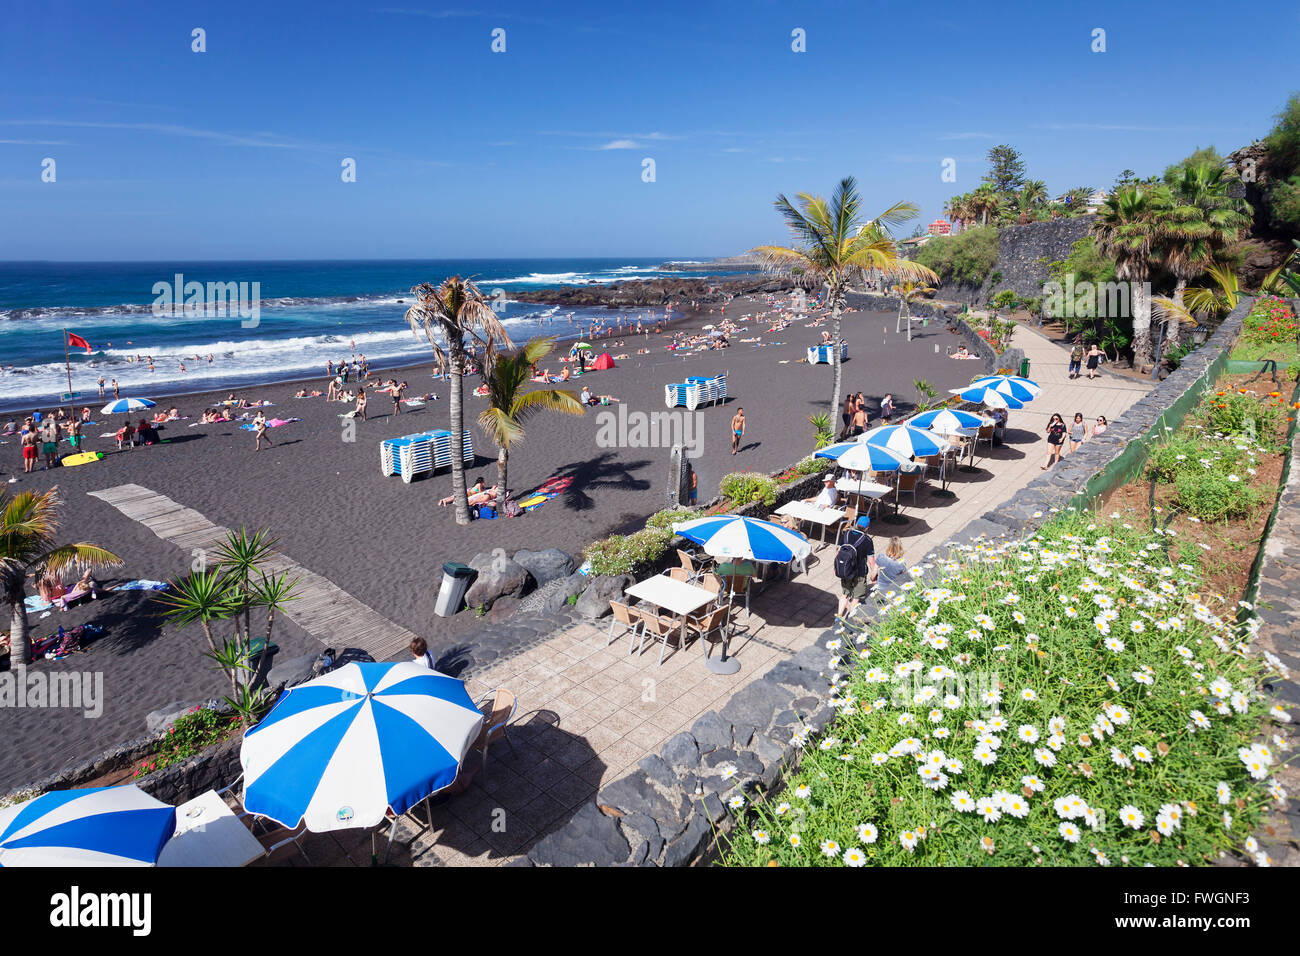 Playa Jardin, Puerto de la Cruz, Tenerife, Canaries, Espagne, Europe, Atlantique Banque D'Images